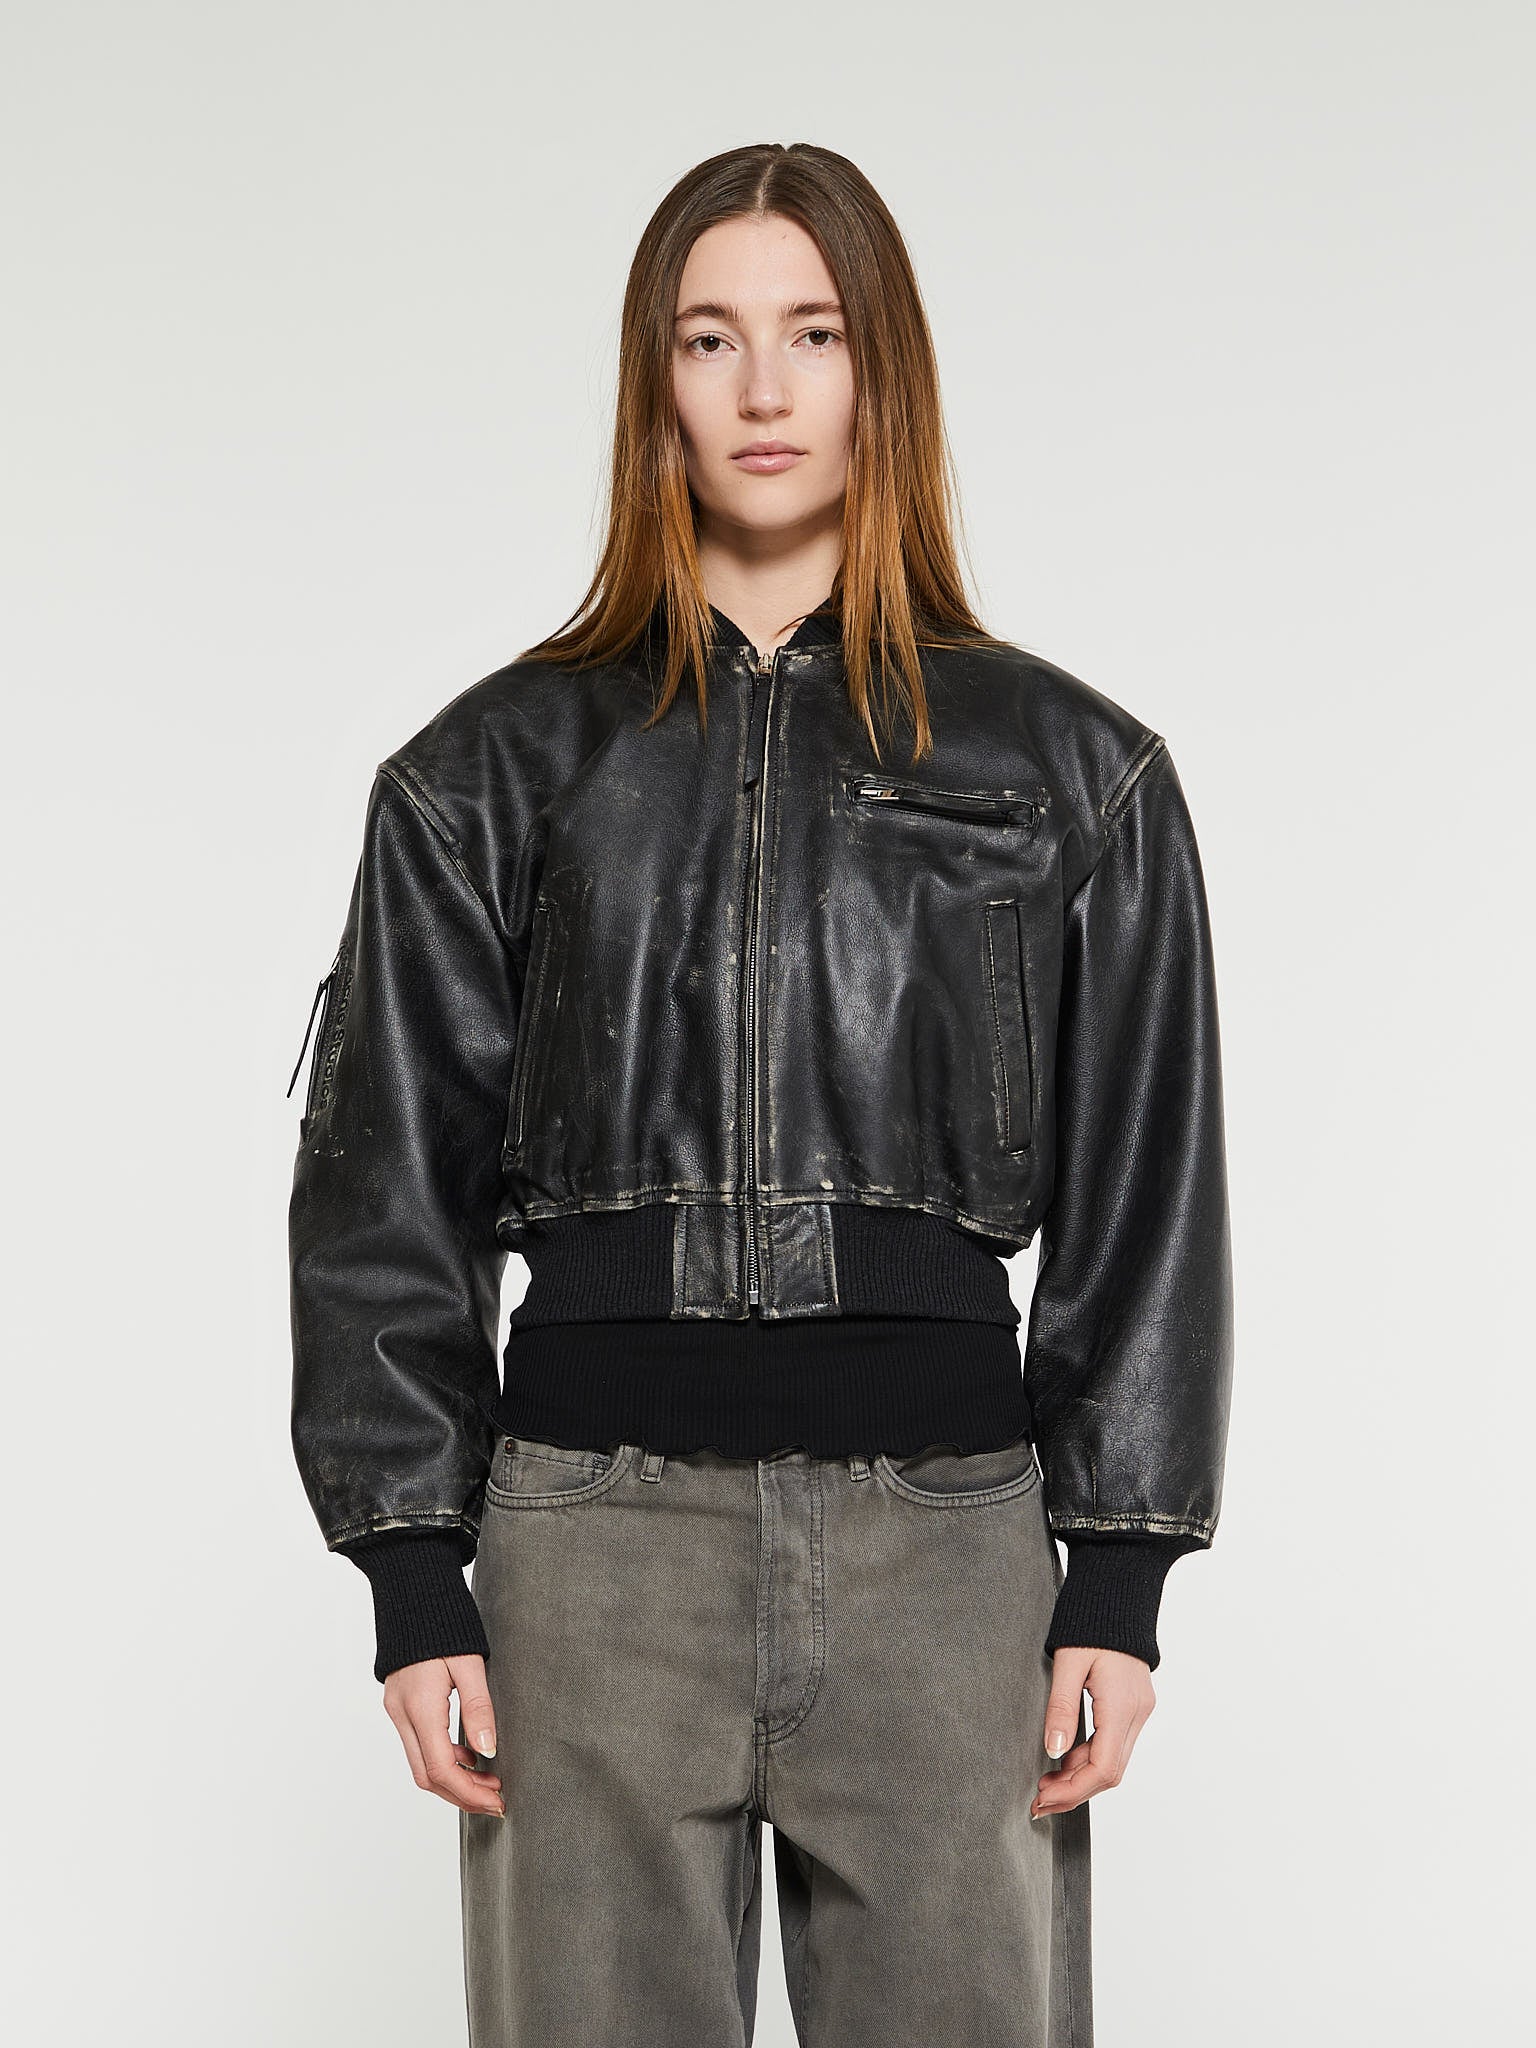 Acne Studios - Leather Bomber Jacket in Black